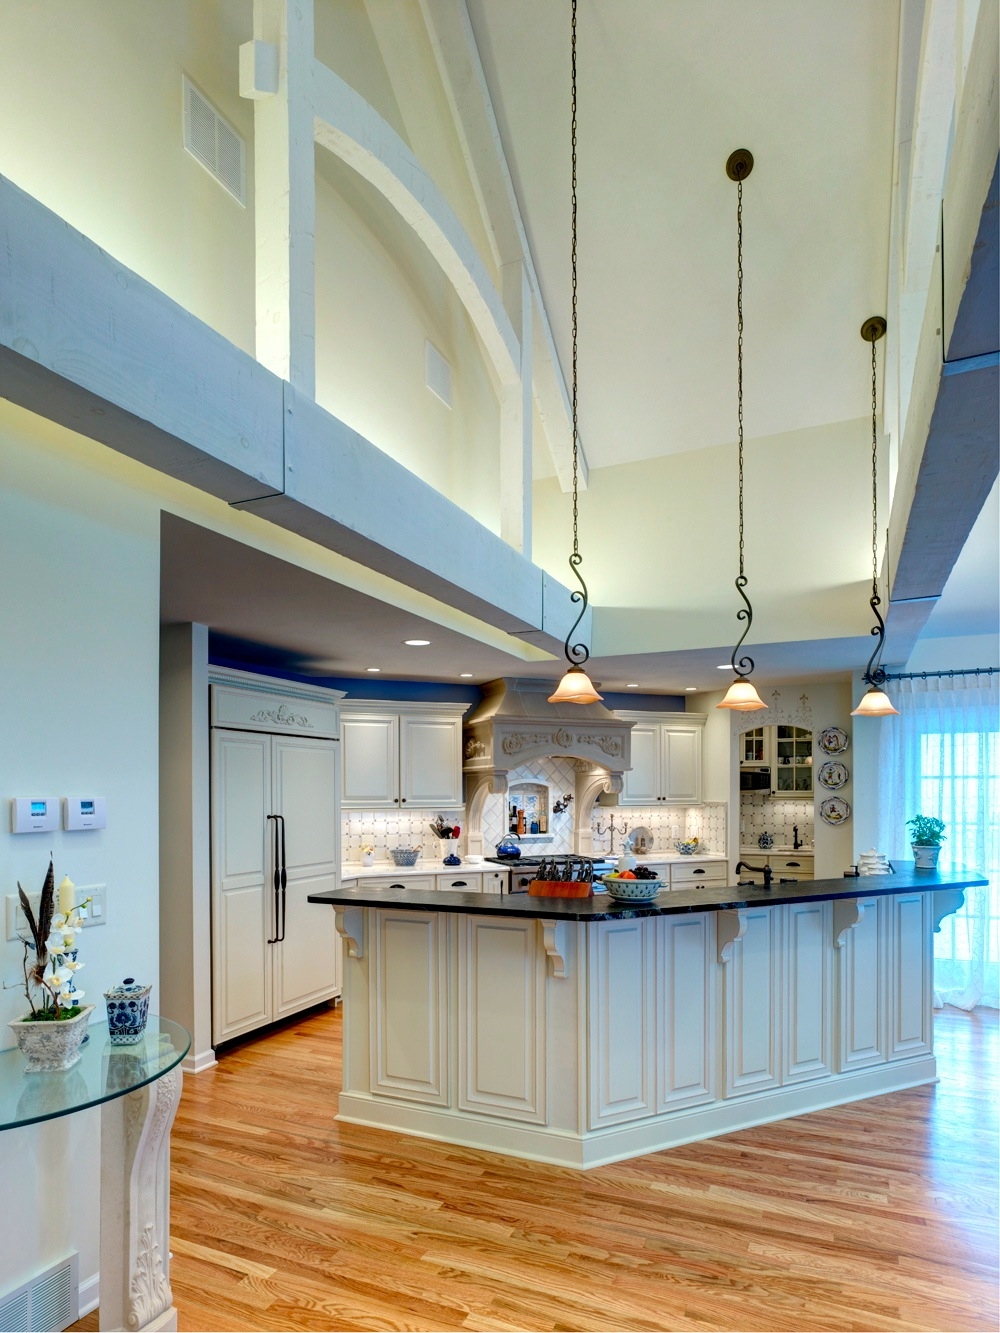 Light Fixtures For High Vaulted Ceilingskitchen lighting vaulted ceiling kutsko kitchen